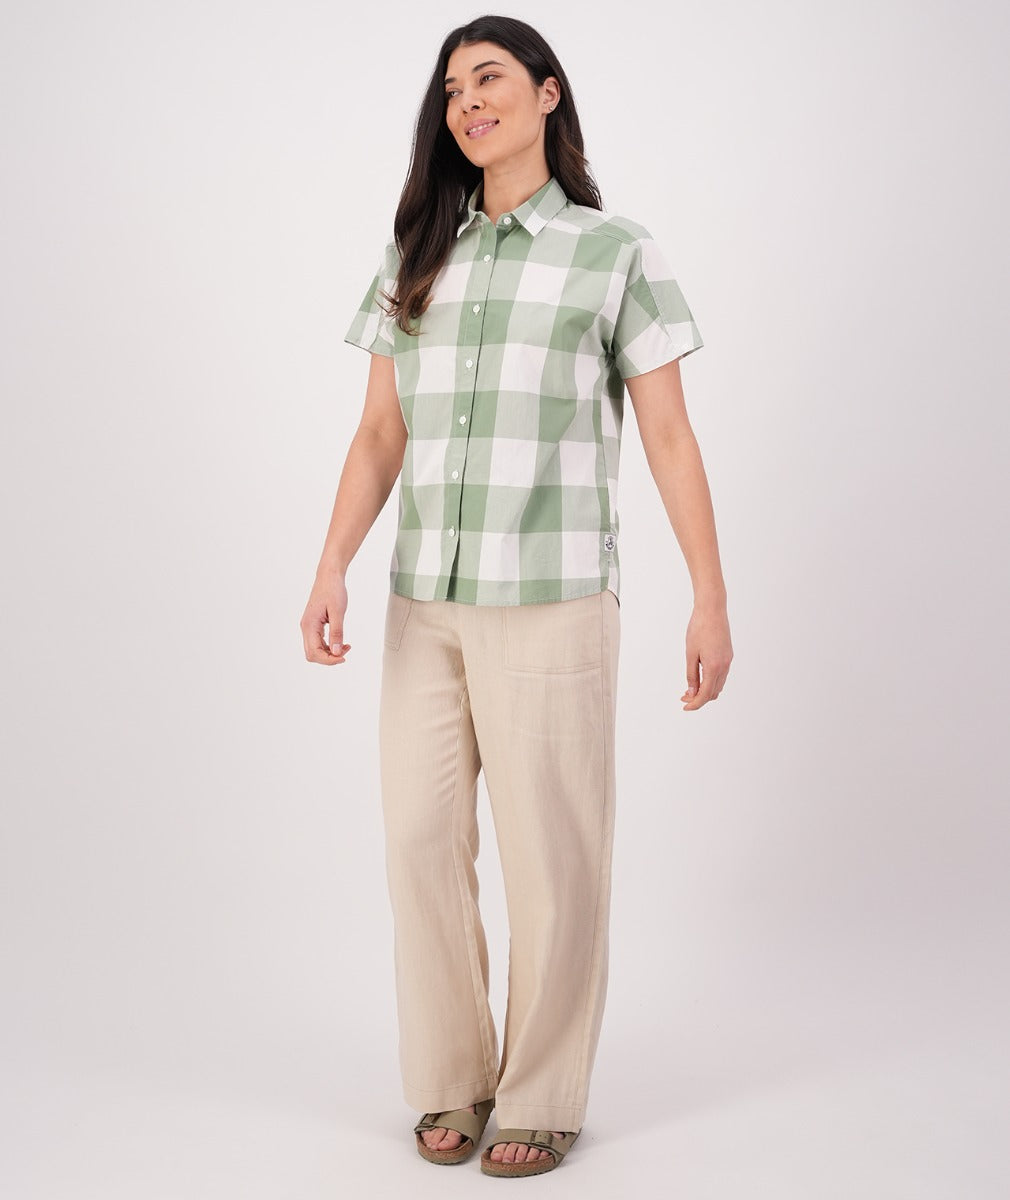 Manaia Short Sleeve Shirt | Fern Check - Swanndri - Beechworth Emporium